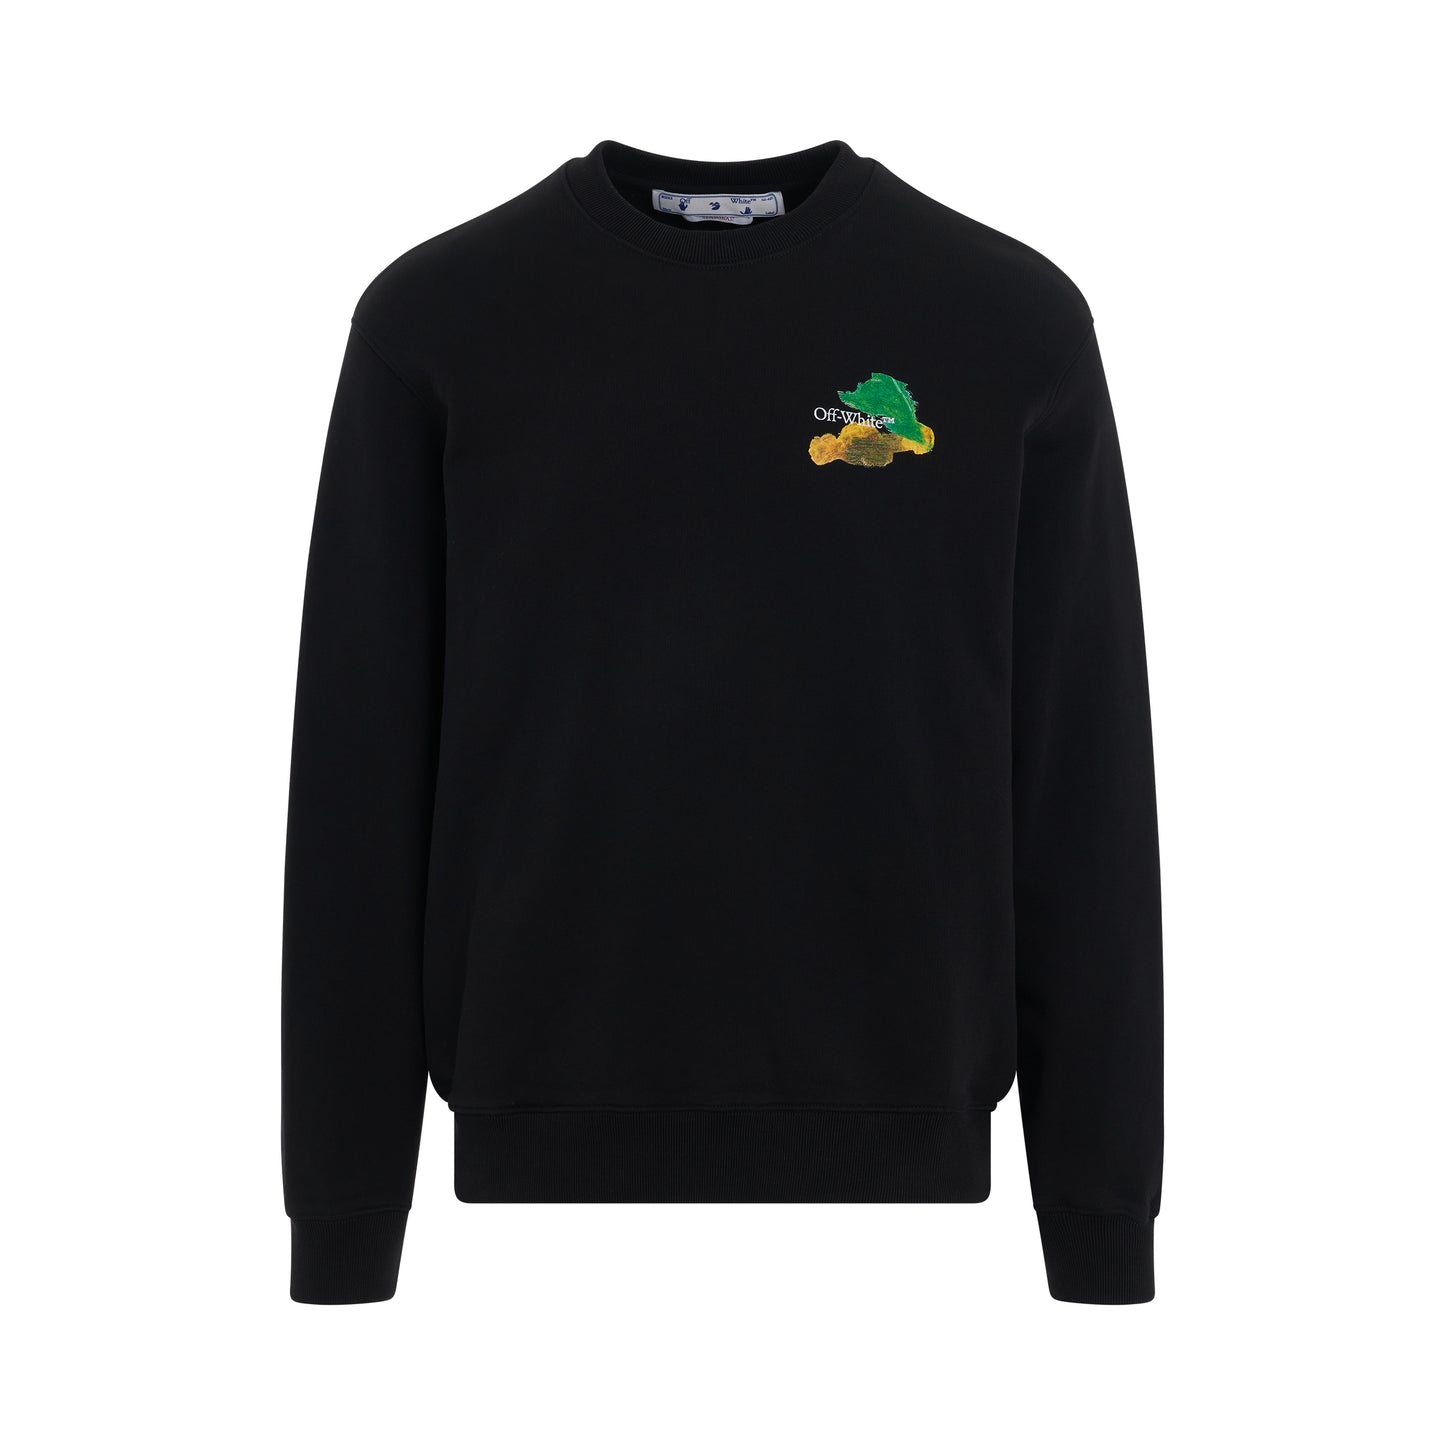 Brush Arrow Slim Crewneck Sweatshirt in Black/Multicolour